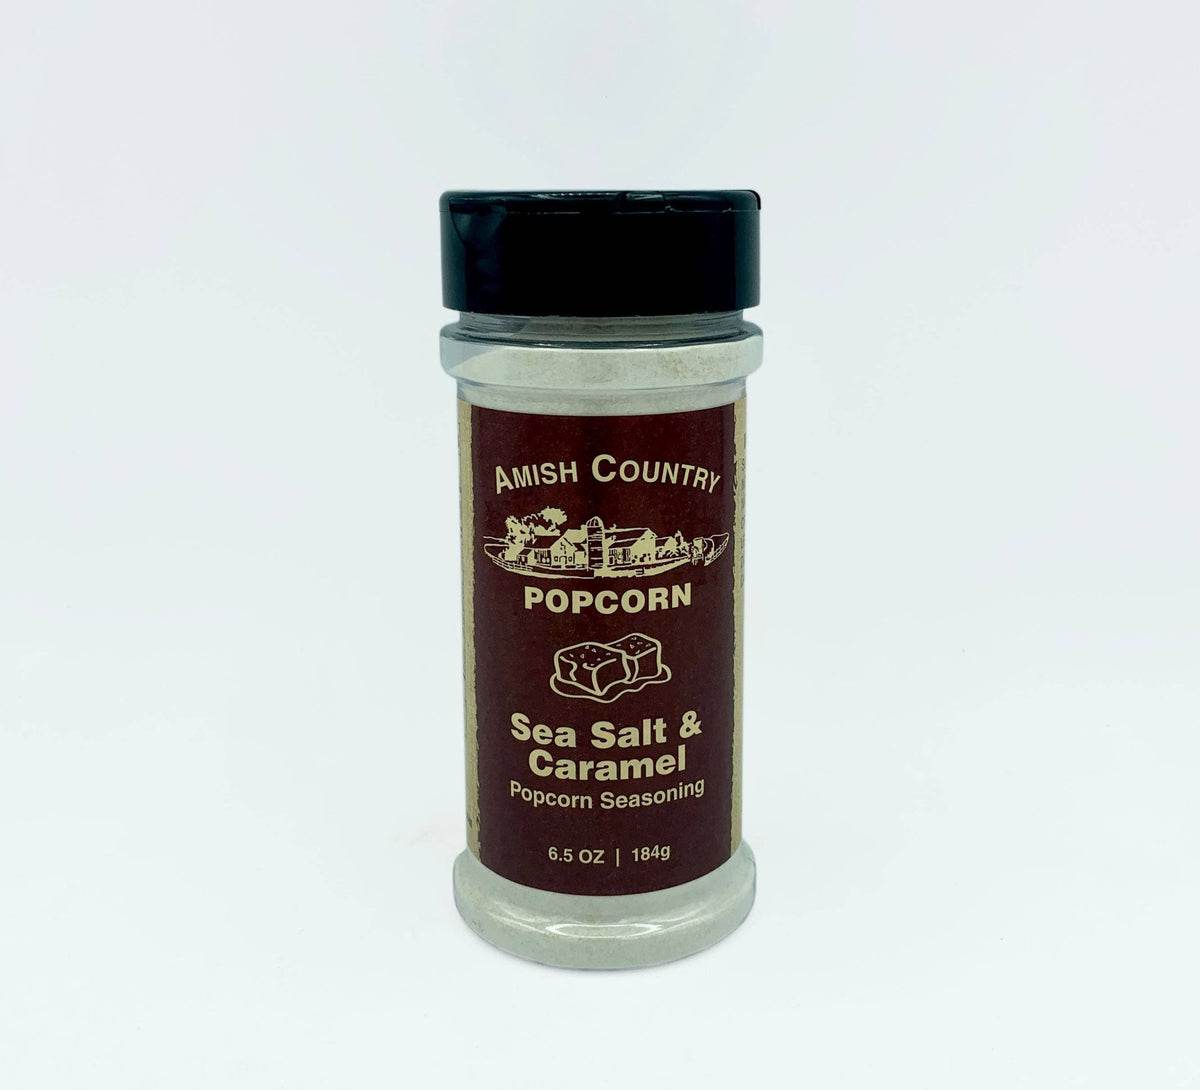 Amish Country Popcorn - Sea Salt & Caramel Seasoning - Pacific Flyway Supplies